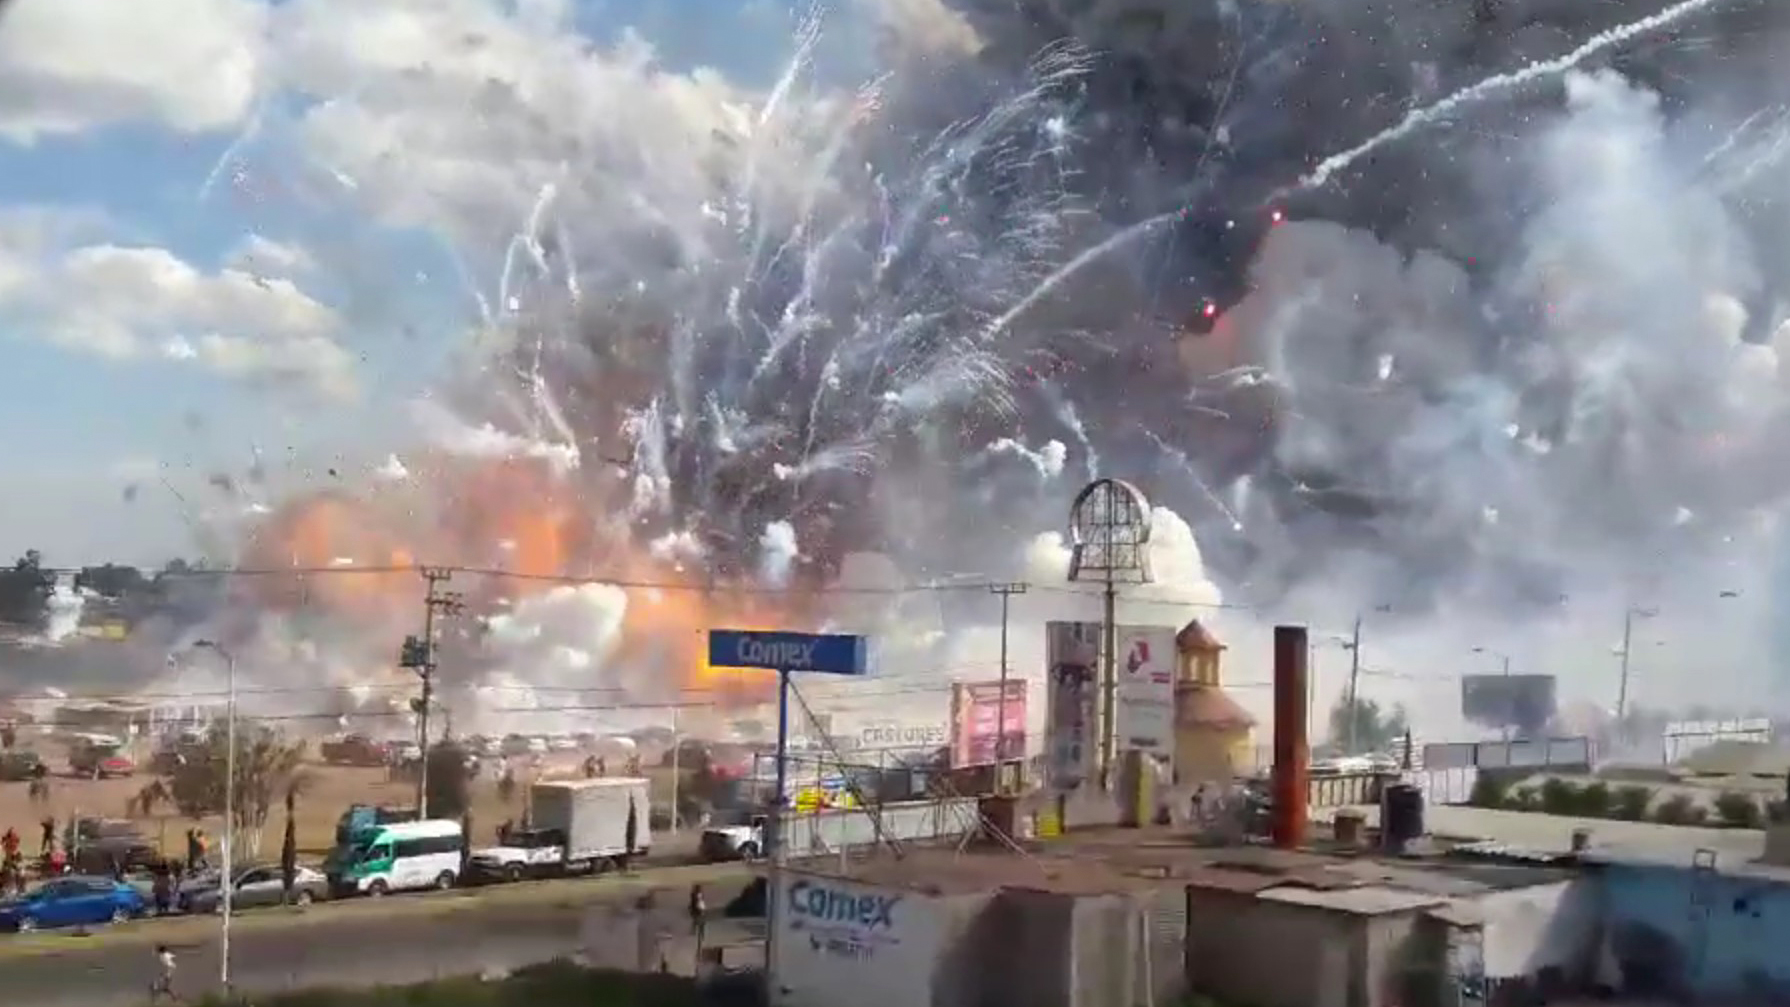 161220174605-01-mexico-fireworks-explosion-1220.jpg